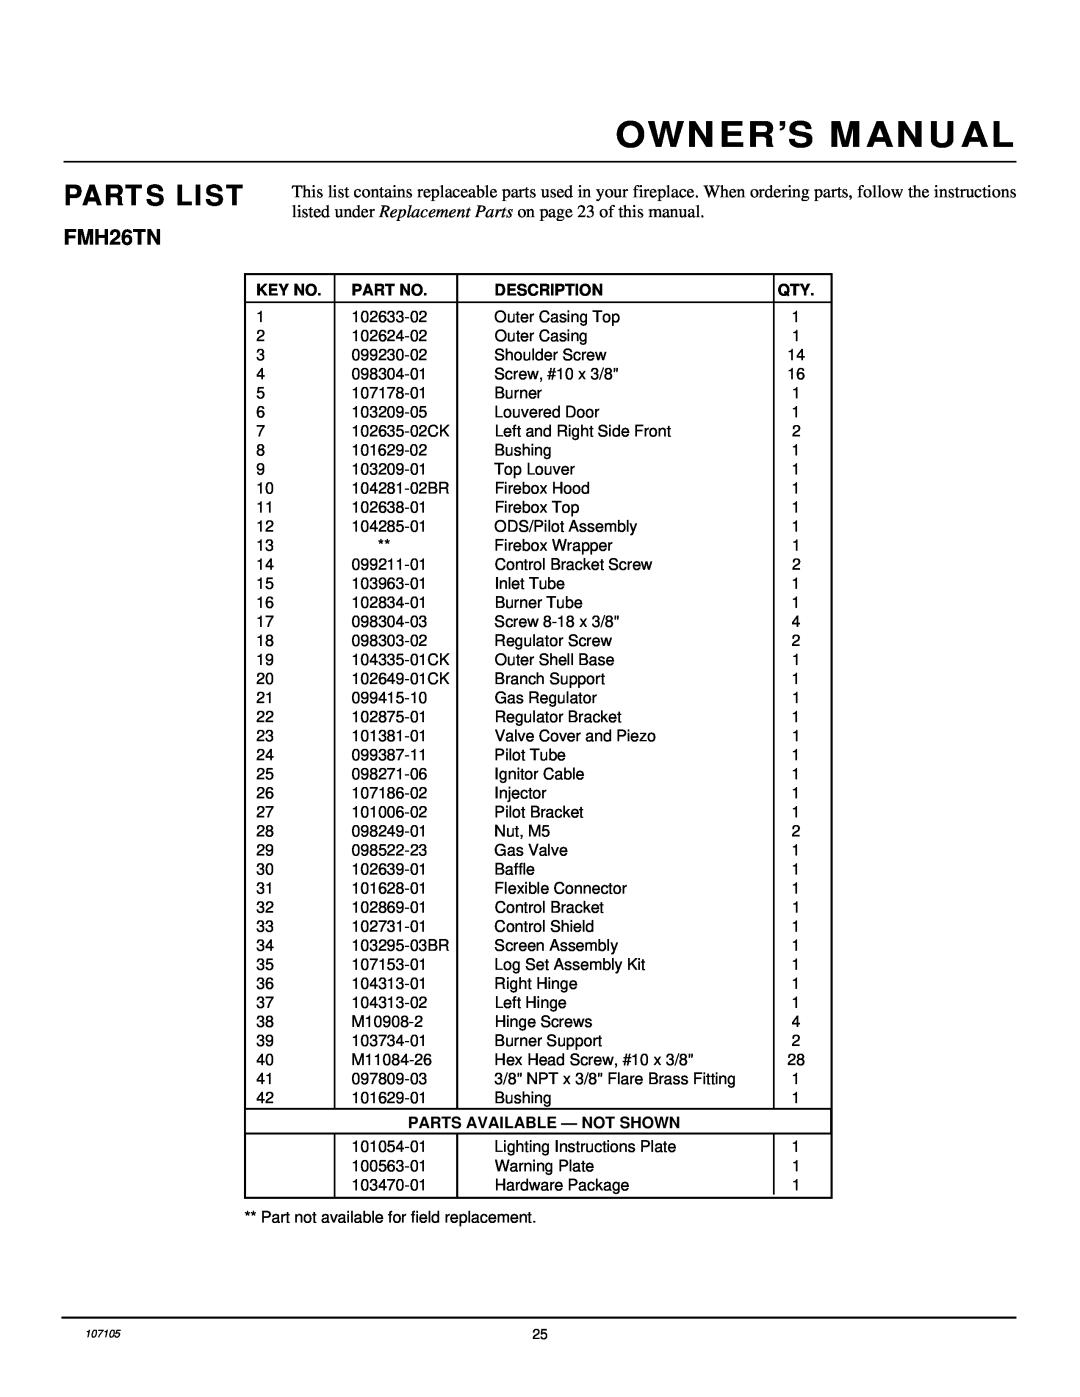 FMI FMH26TN installation manual Parts List, Description, Parts Available - Not Shown 